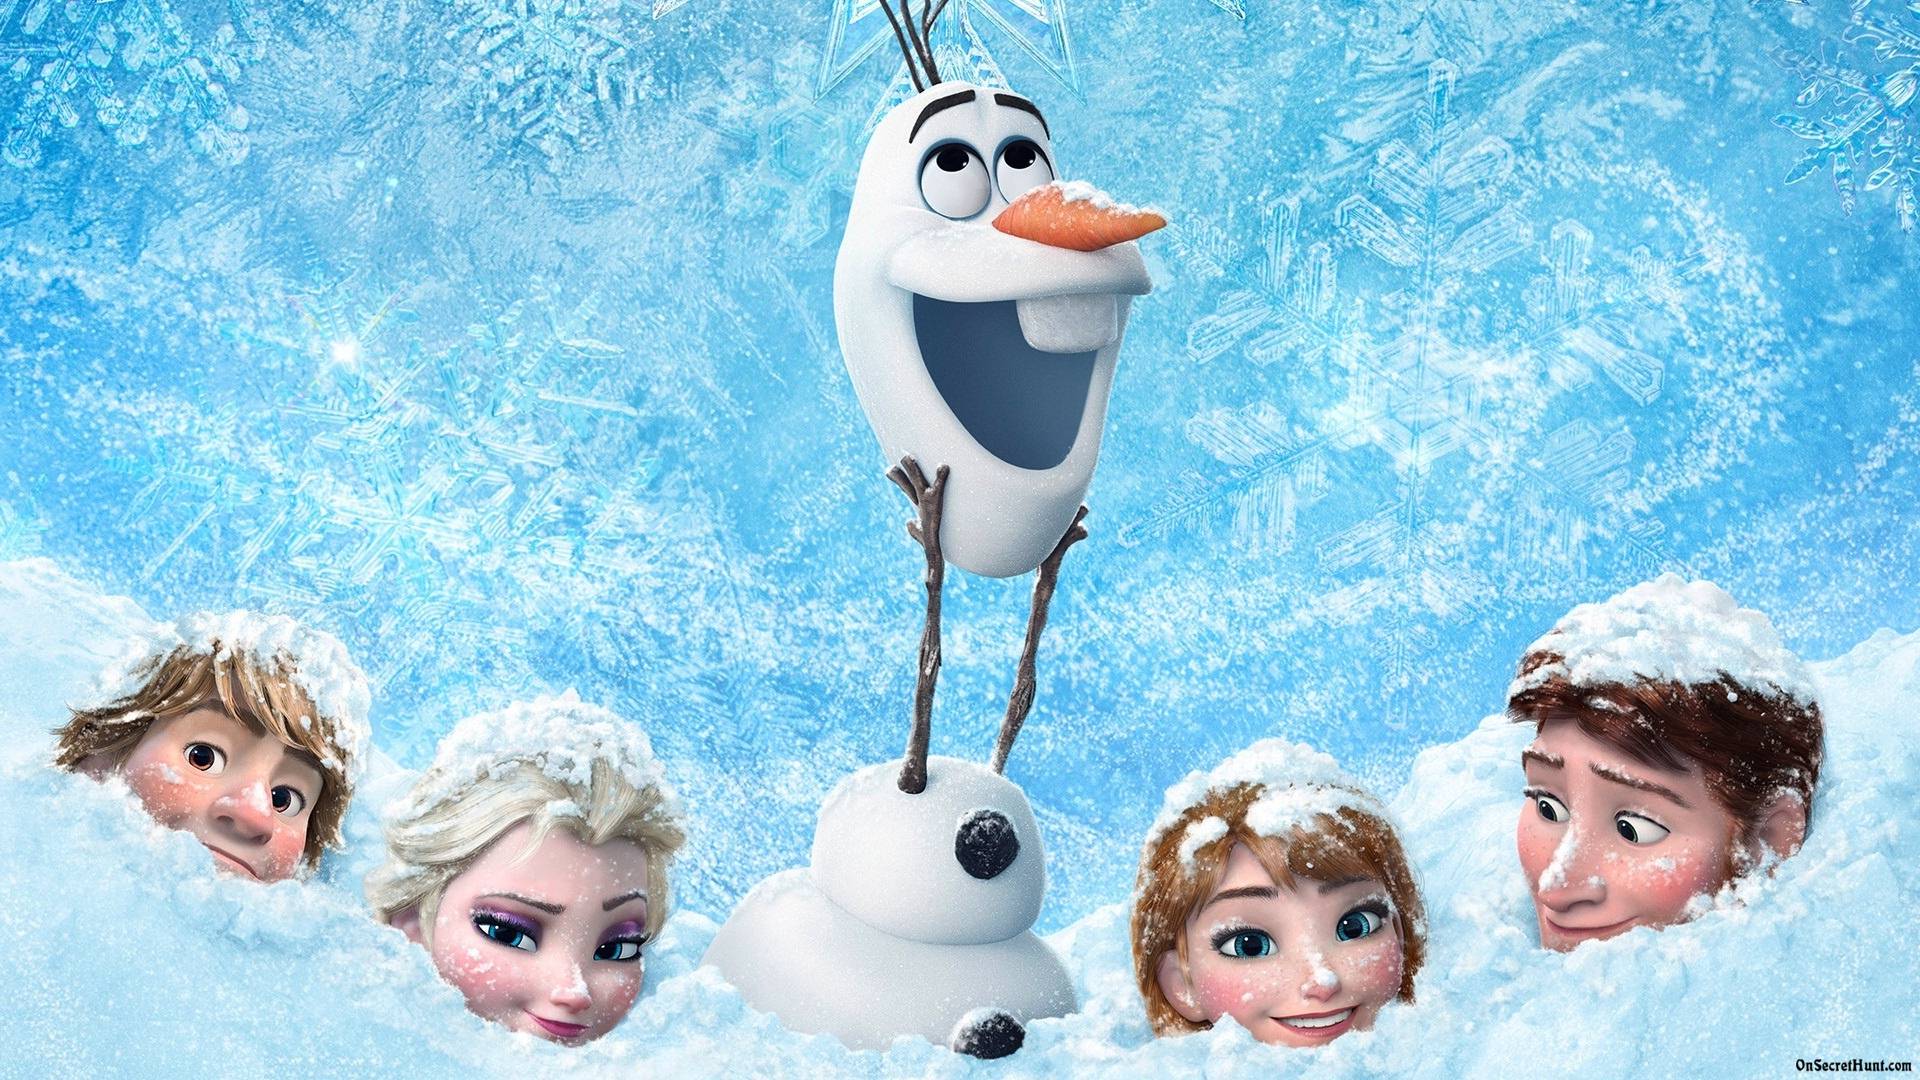 Frozen (2013) Wallpaper, High Definition, High Quality